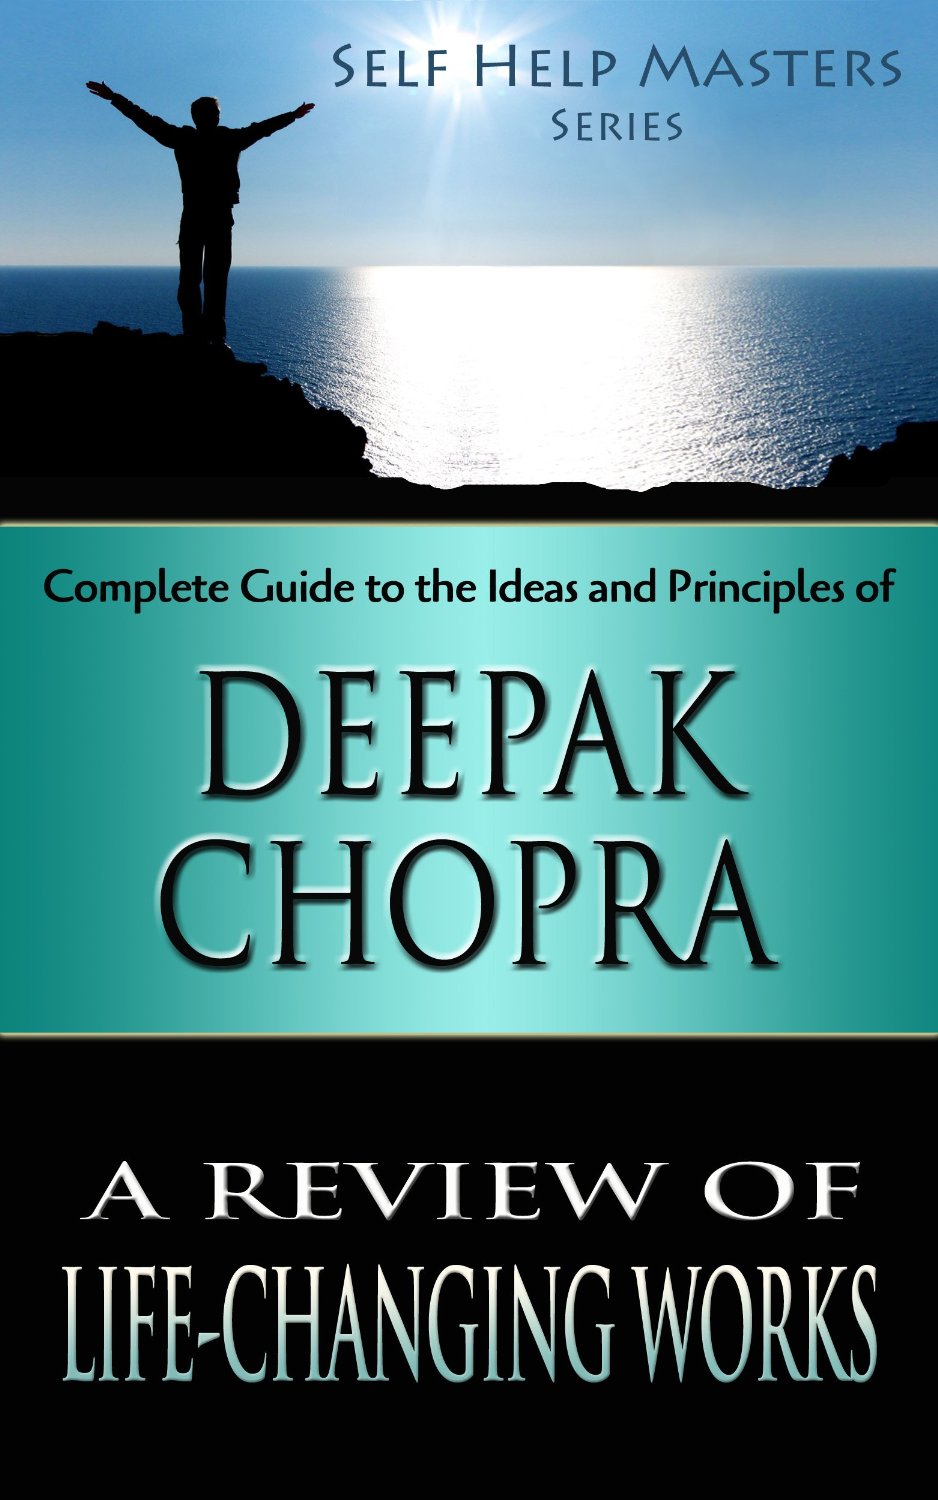 Self Help Masters – Deepak Chopra: A Review of Life Changing Works by Sid Akula